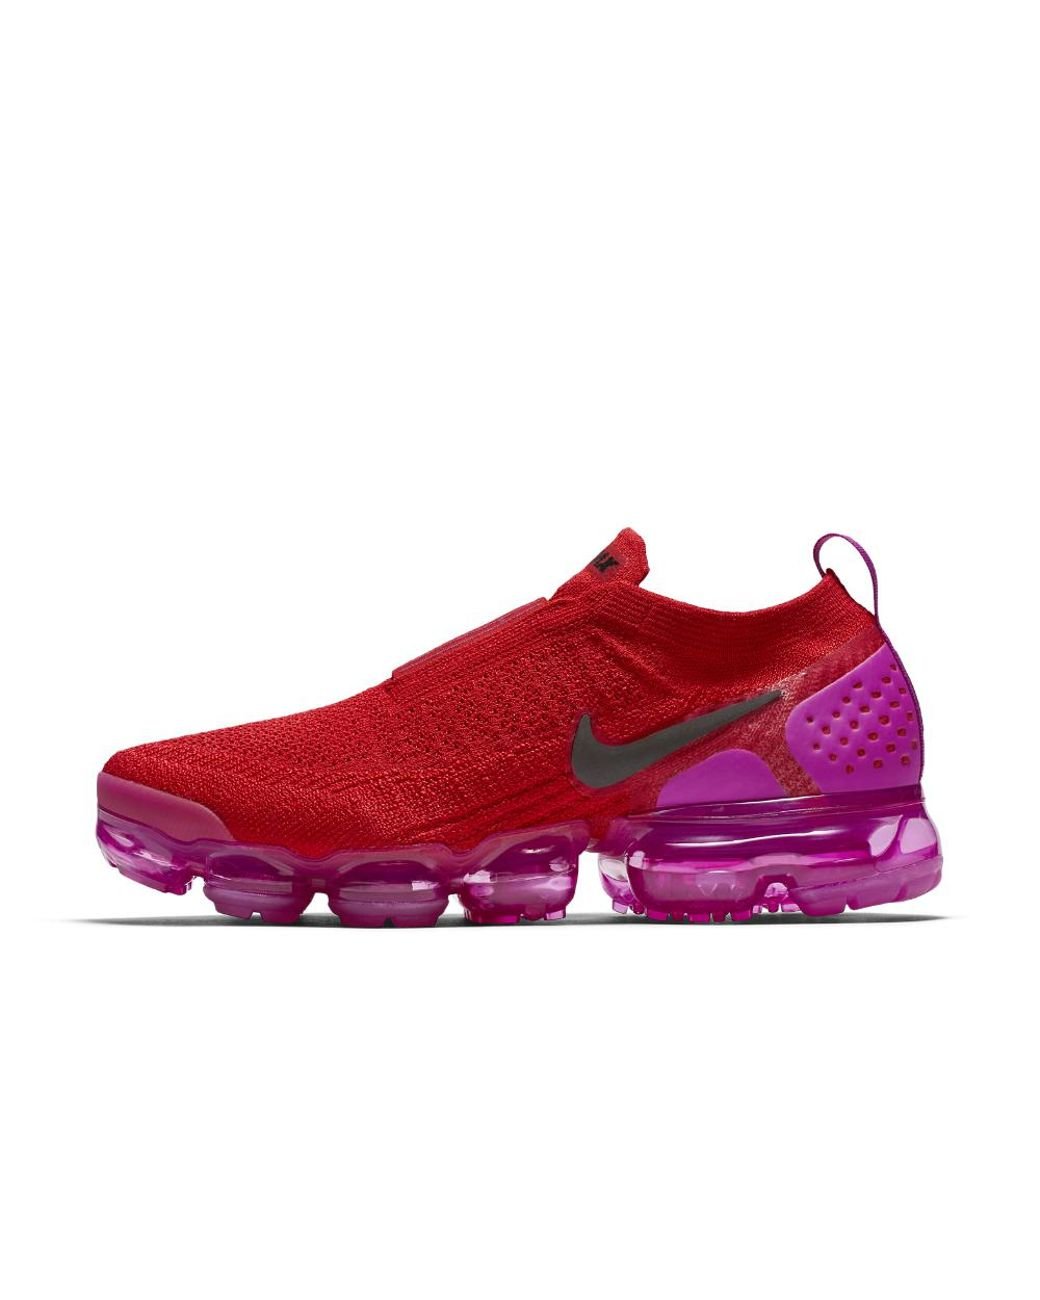 Nike Air Vapormax Flyknit Moc 2 Women's Running Shoe in Red | Lyst